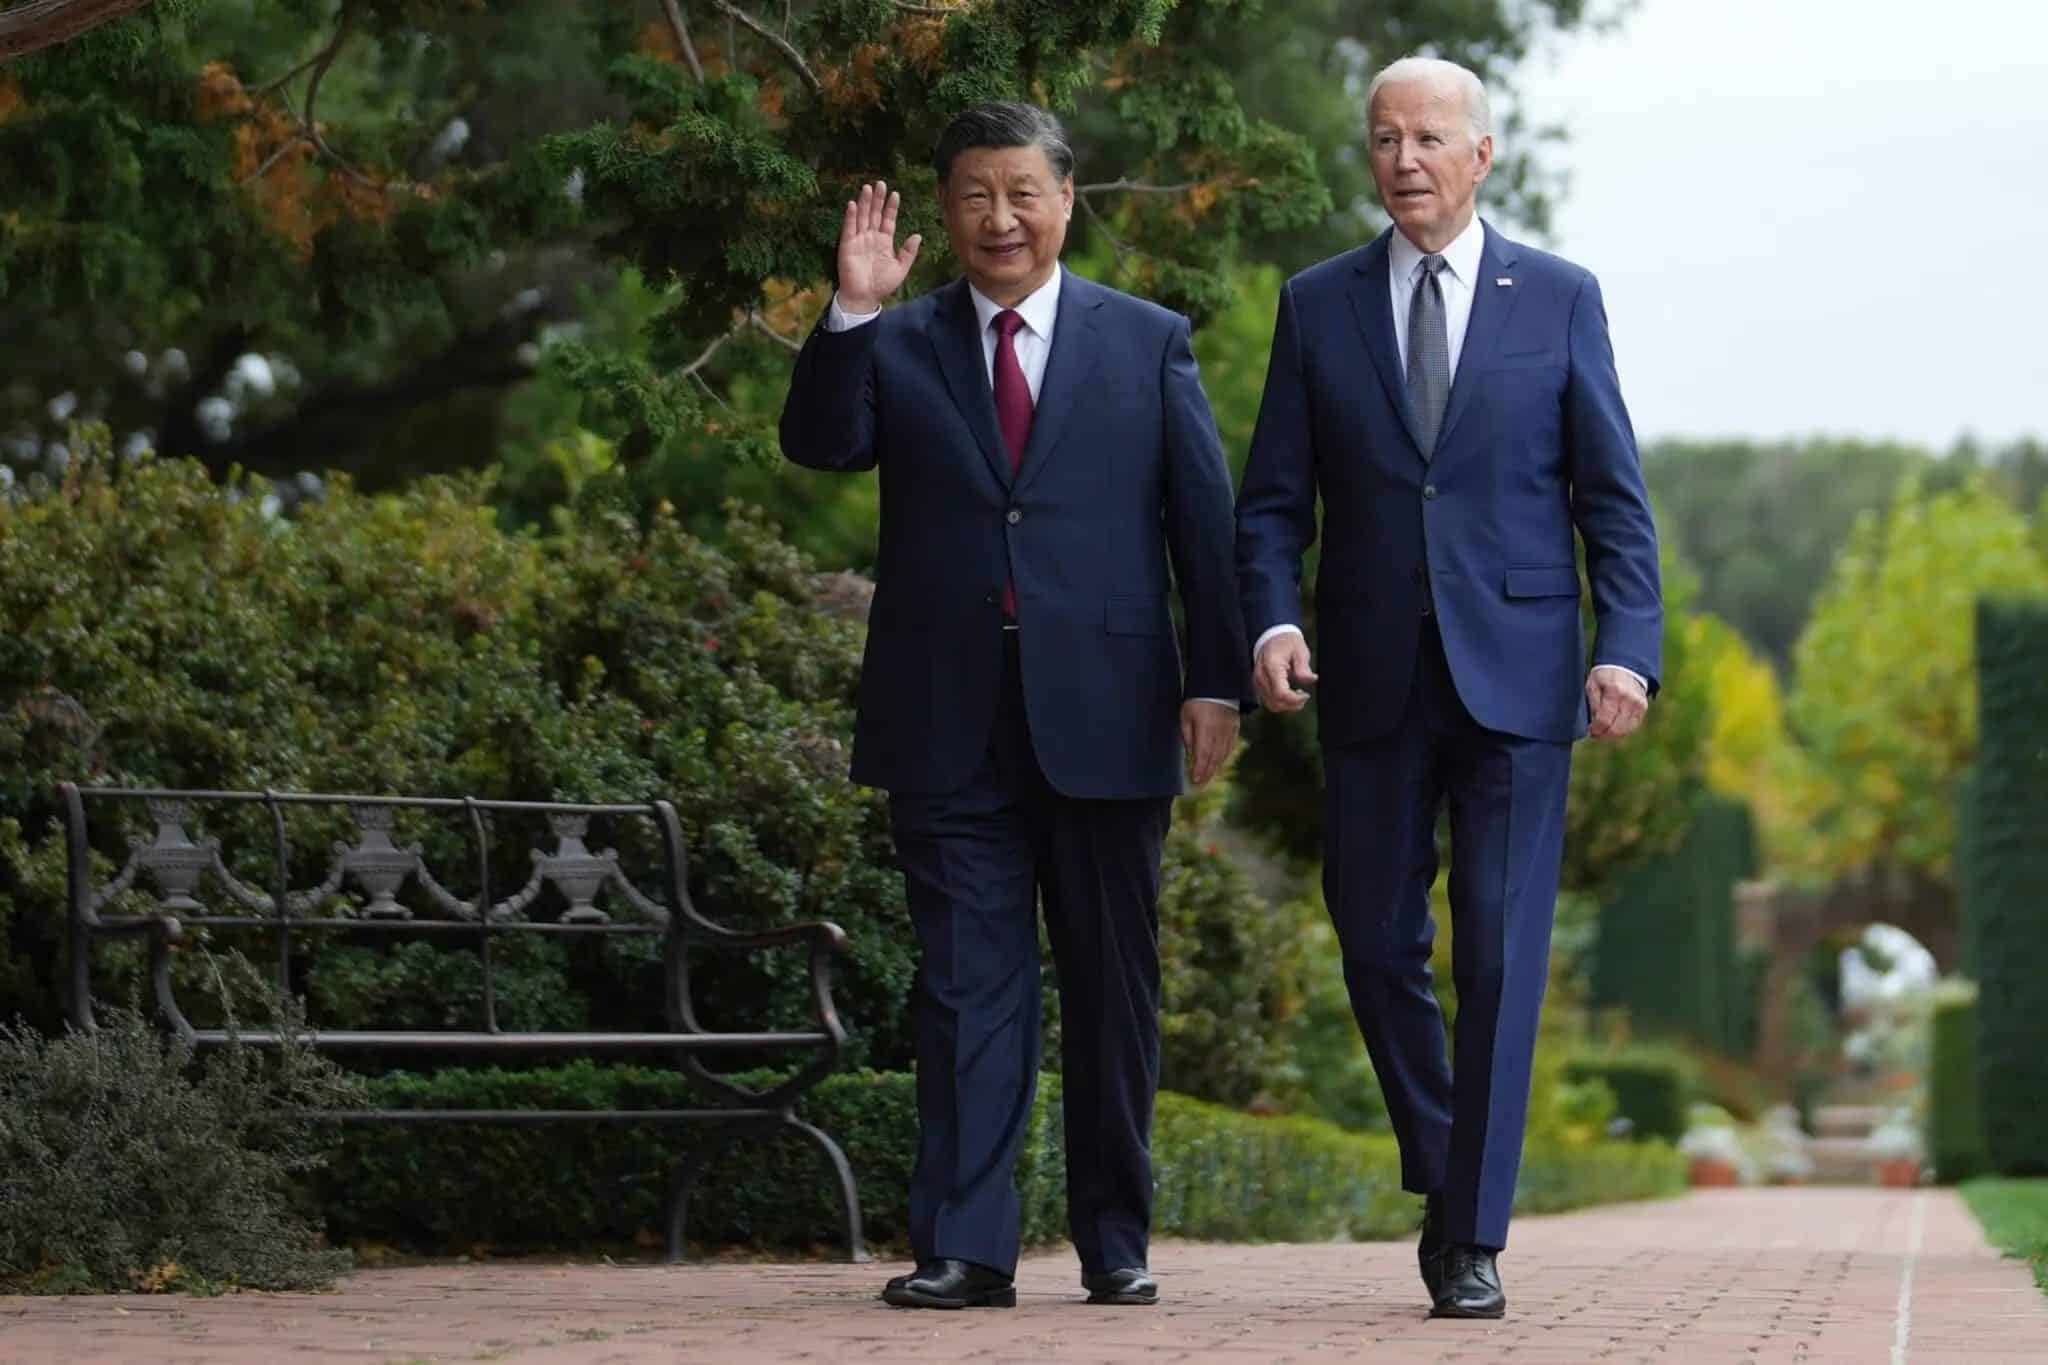 Navigating the Tides of Power at the Biden-Xi Filoli Dialogue